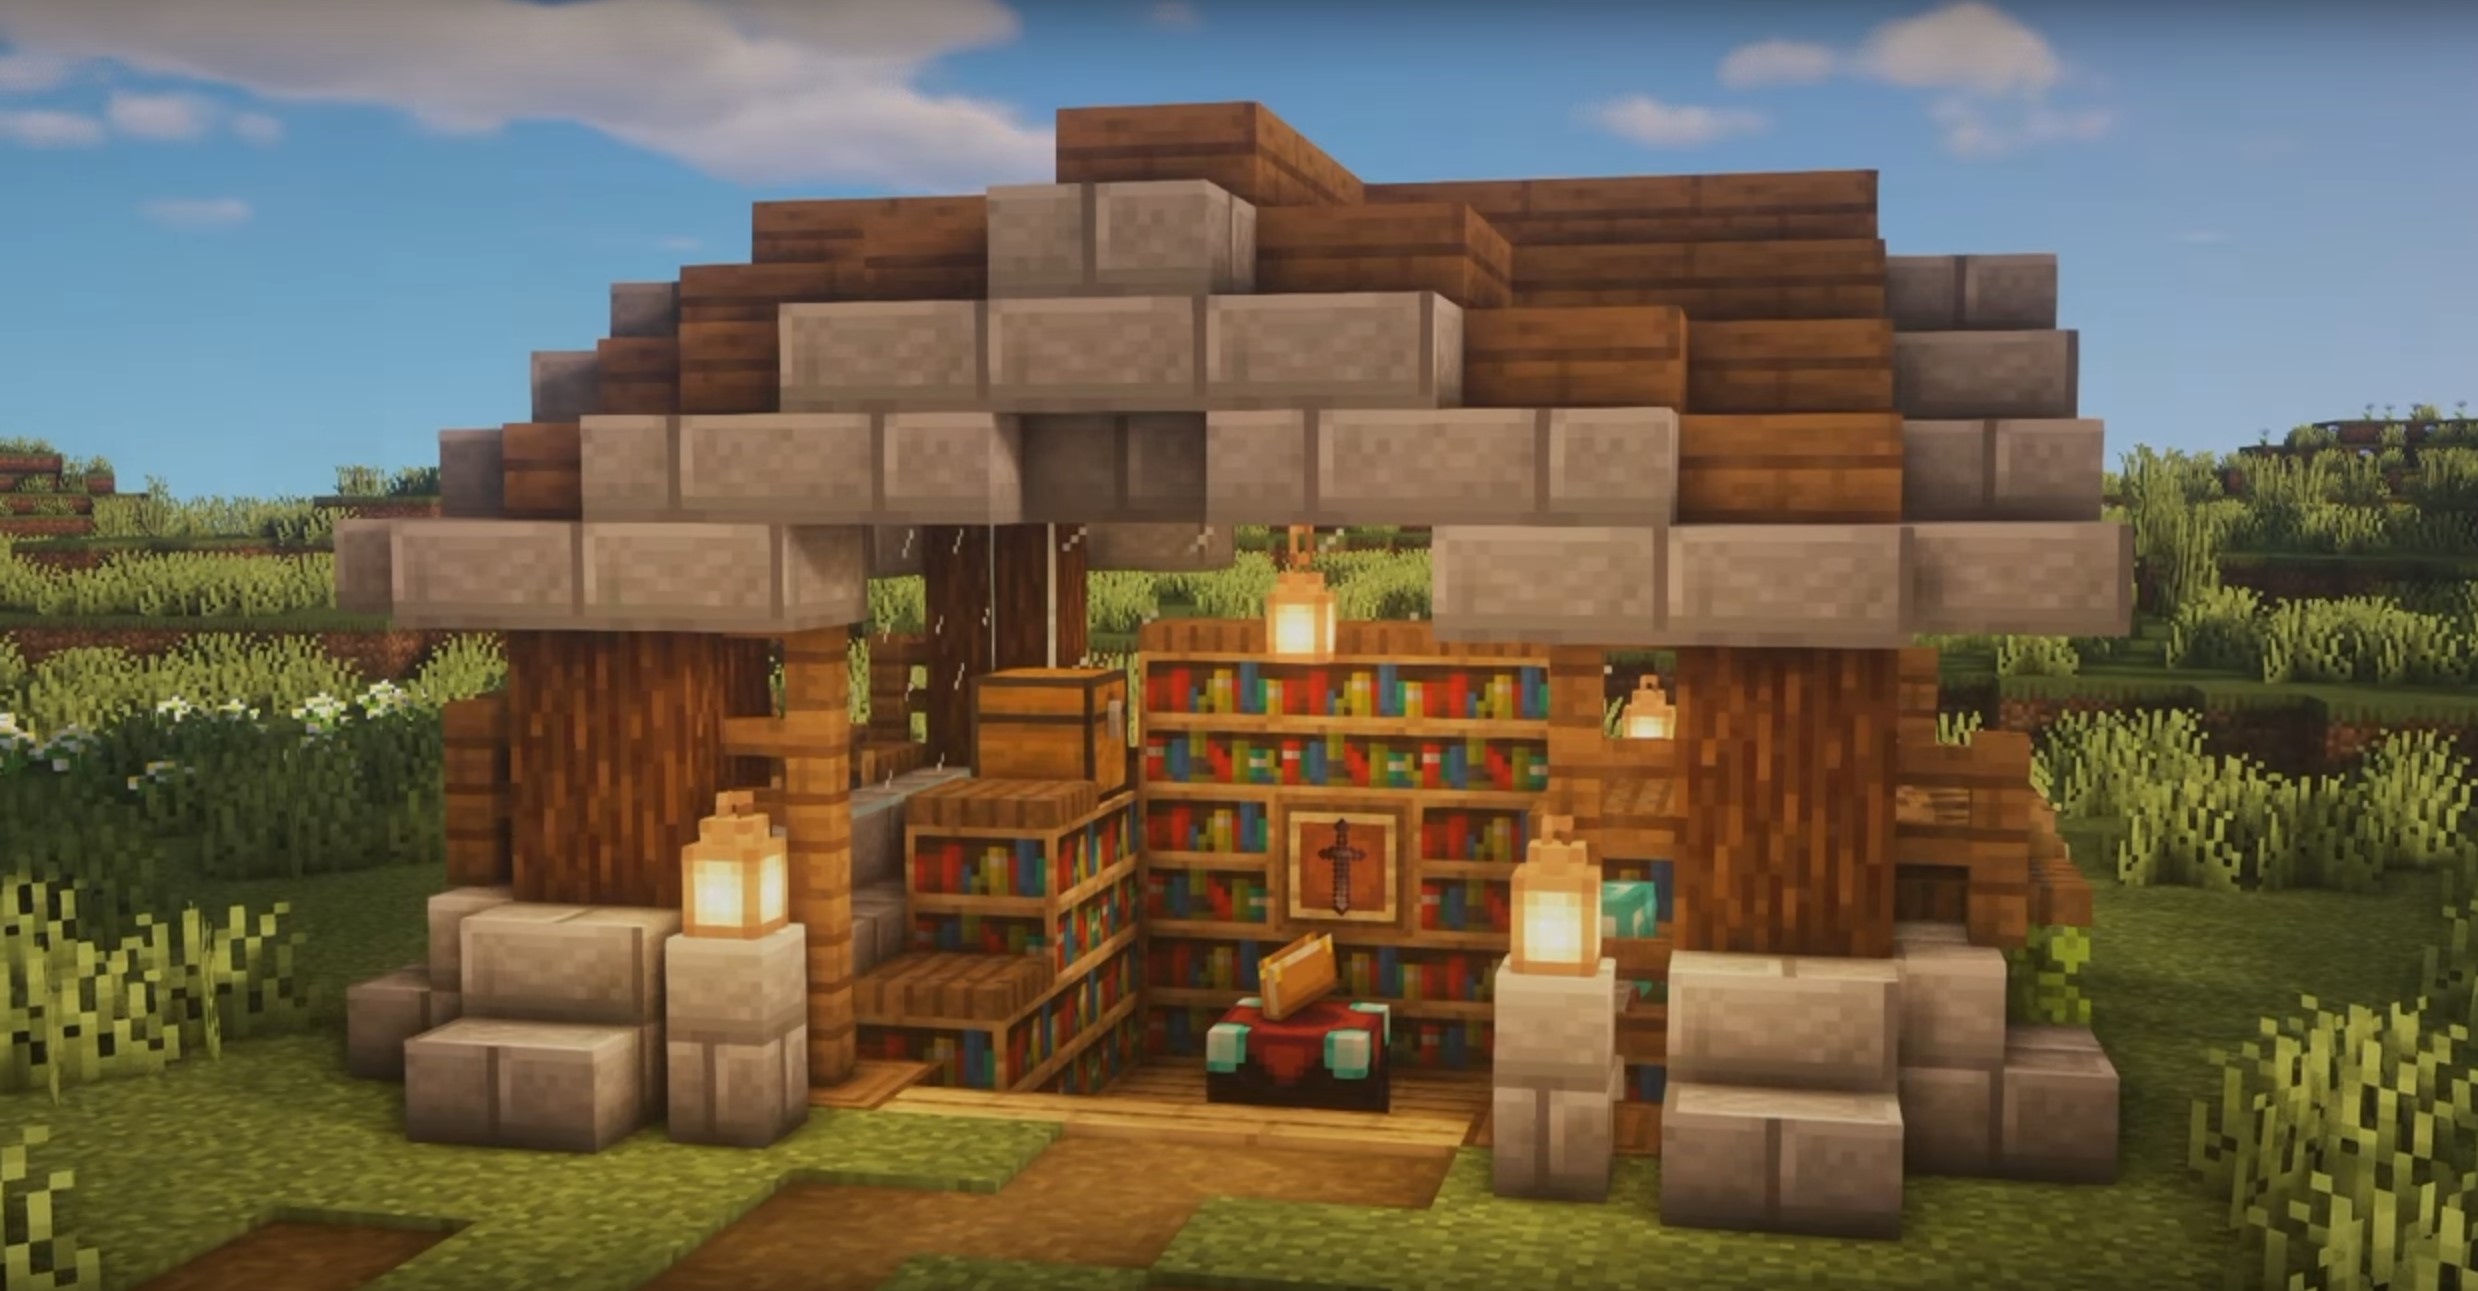 Enchanting House minecraft building idea